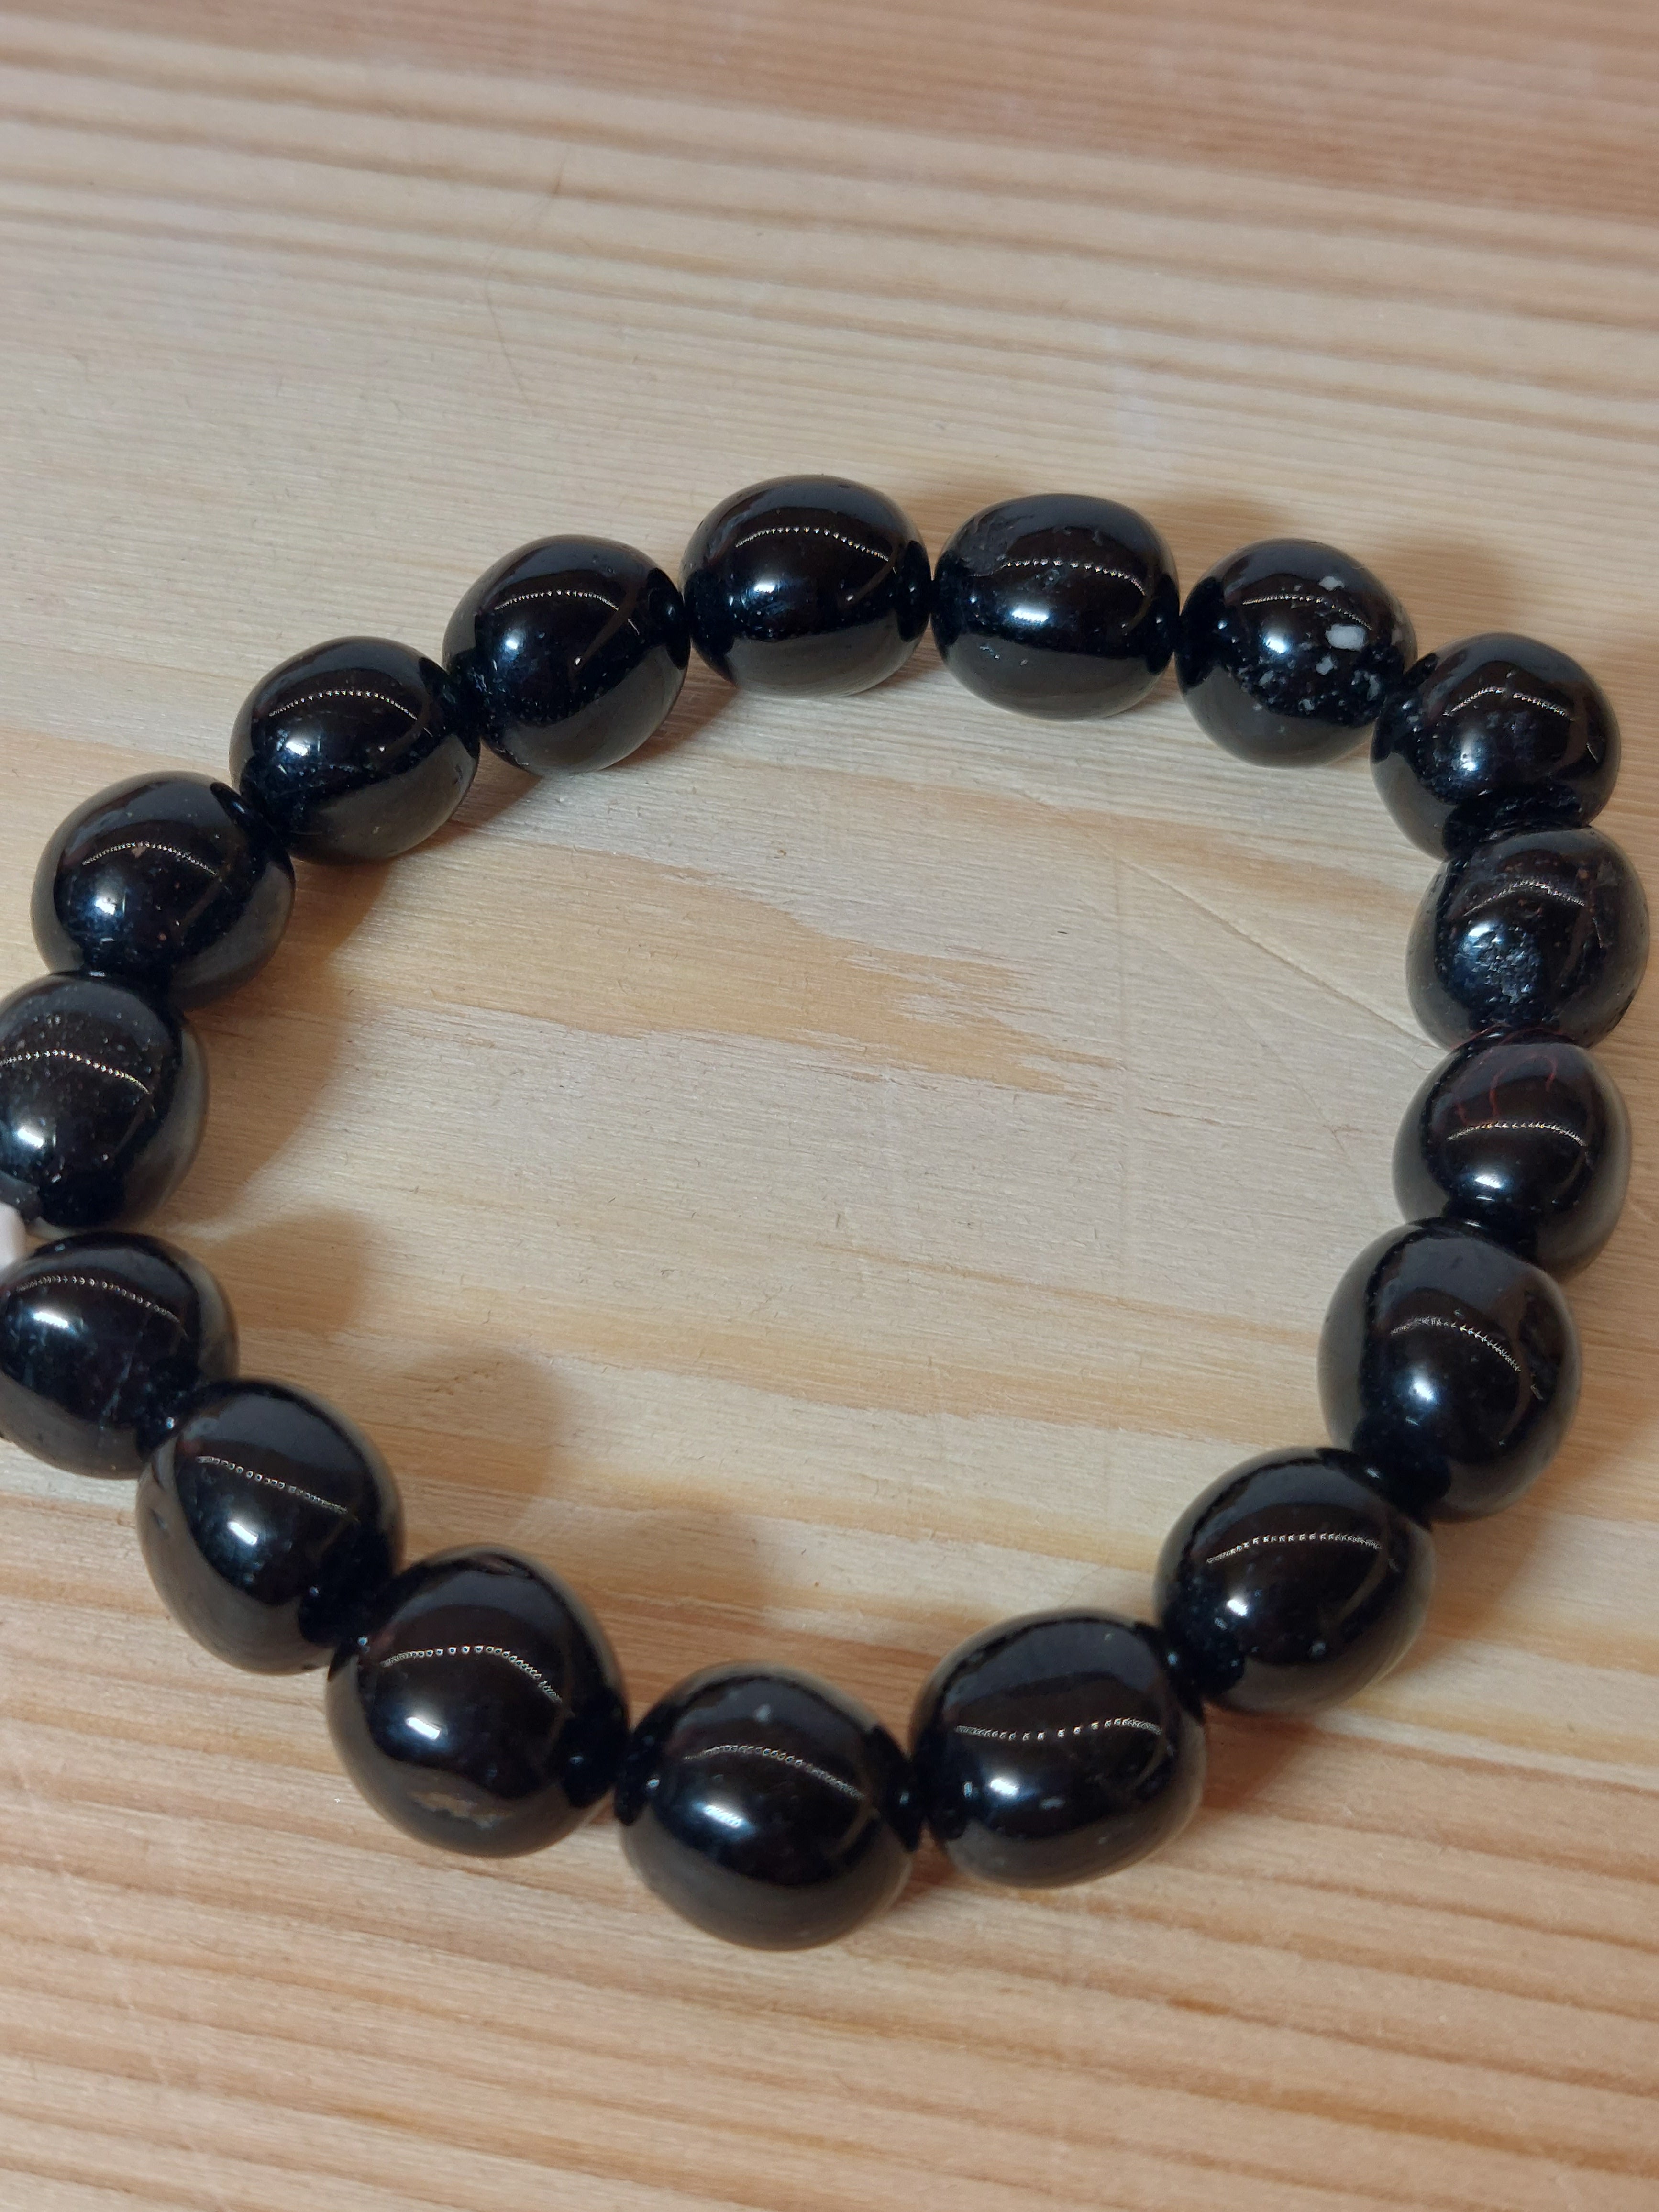 Black Tourmaline Nugget Bead Bracelet - 11mm Bead